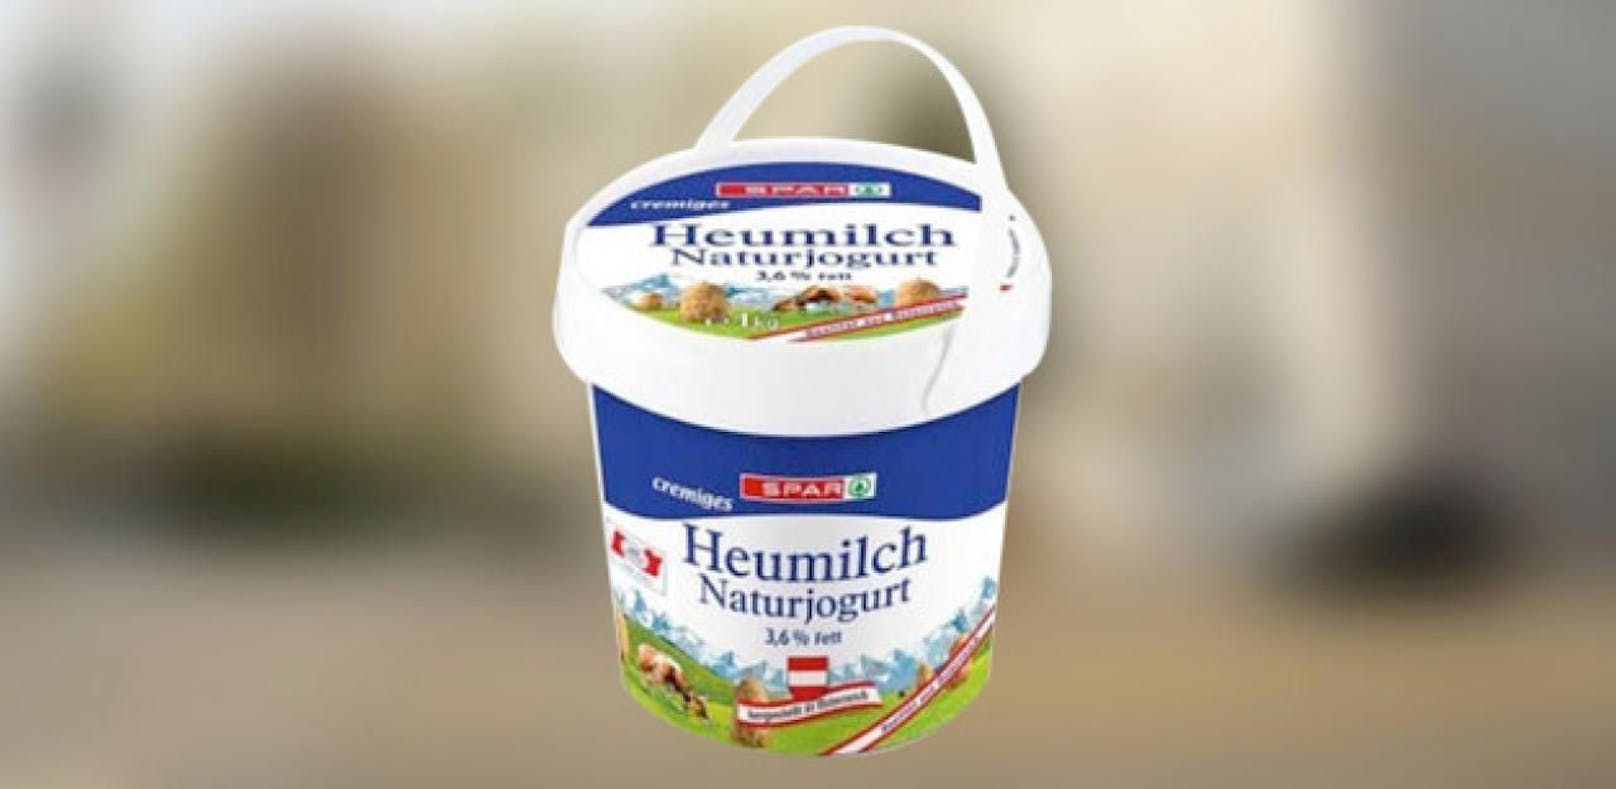 Spar ruft Joghurt wegen Glassplittern zurück